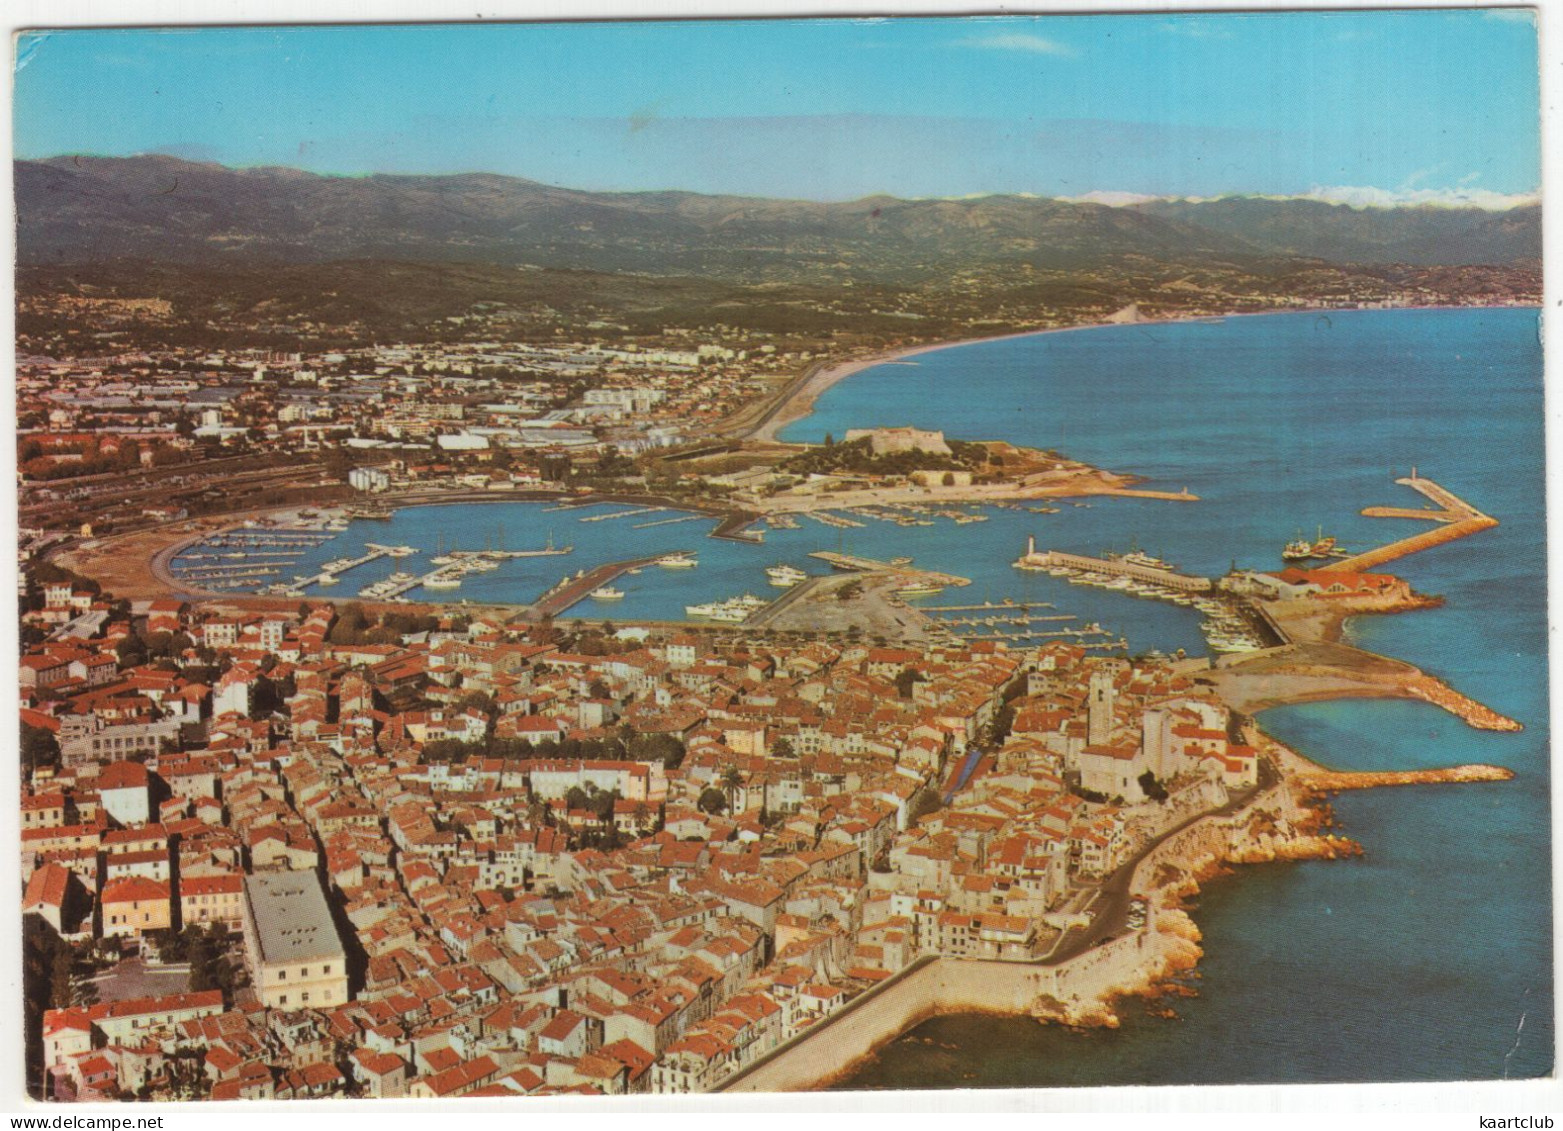 Antibes - Le Port Vauban - (France) - 1976 - Antibes - Altstadt